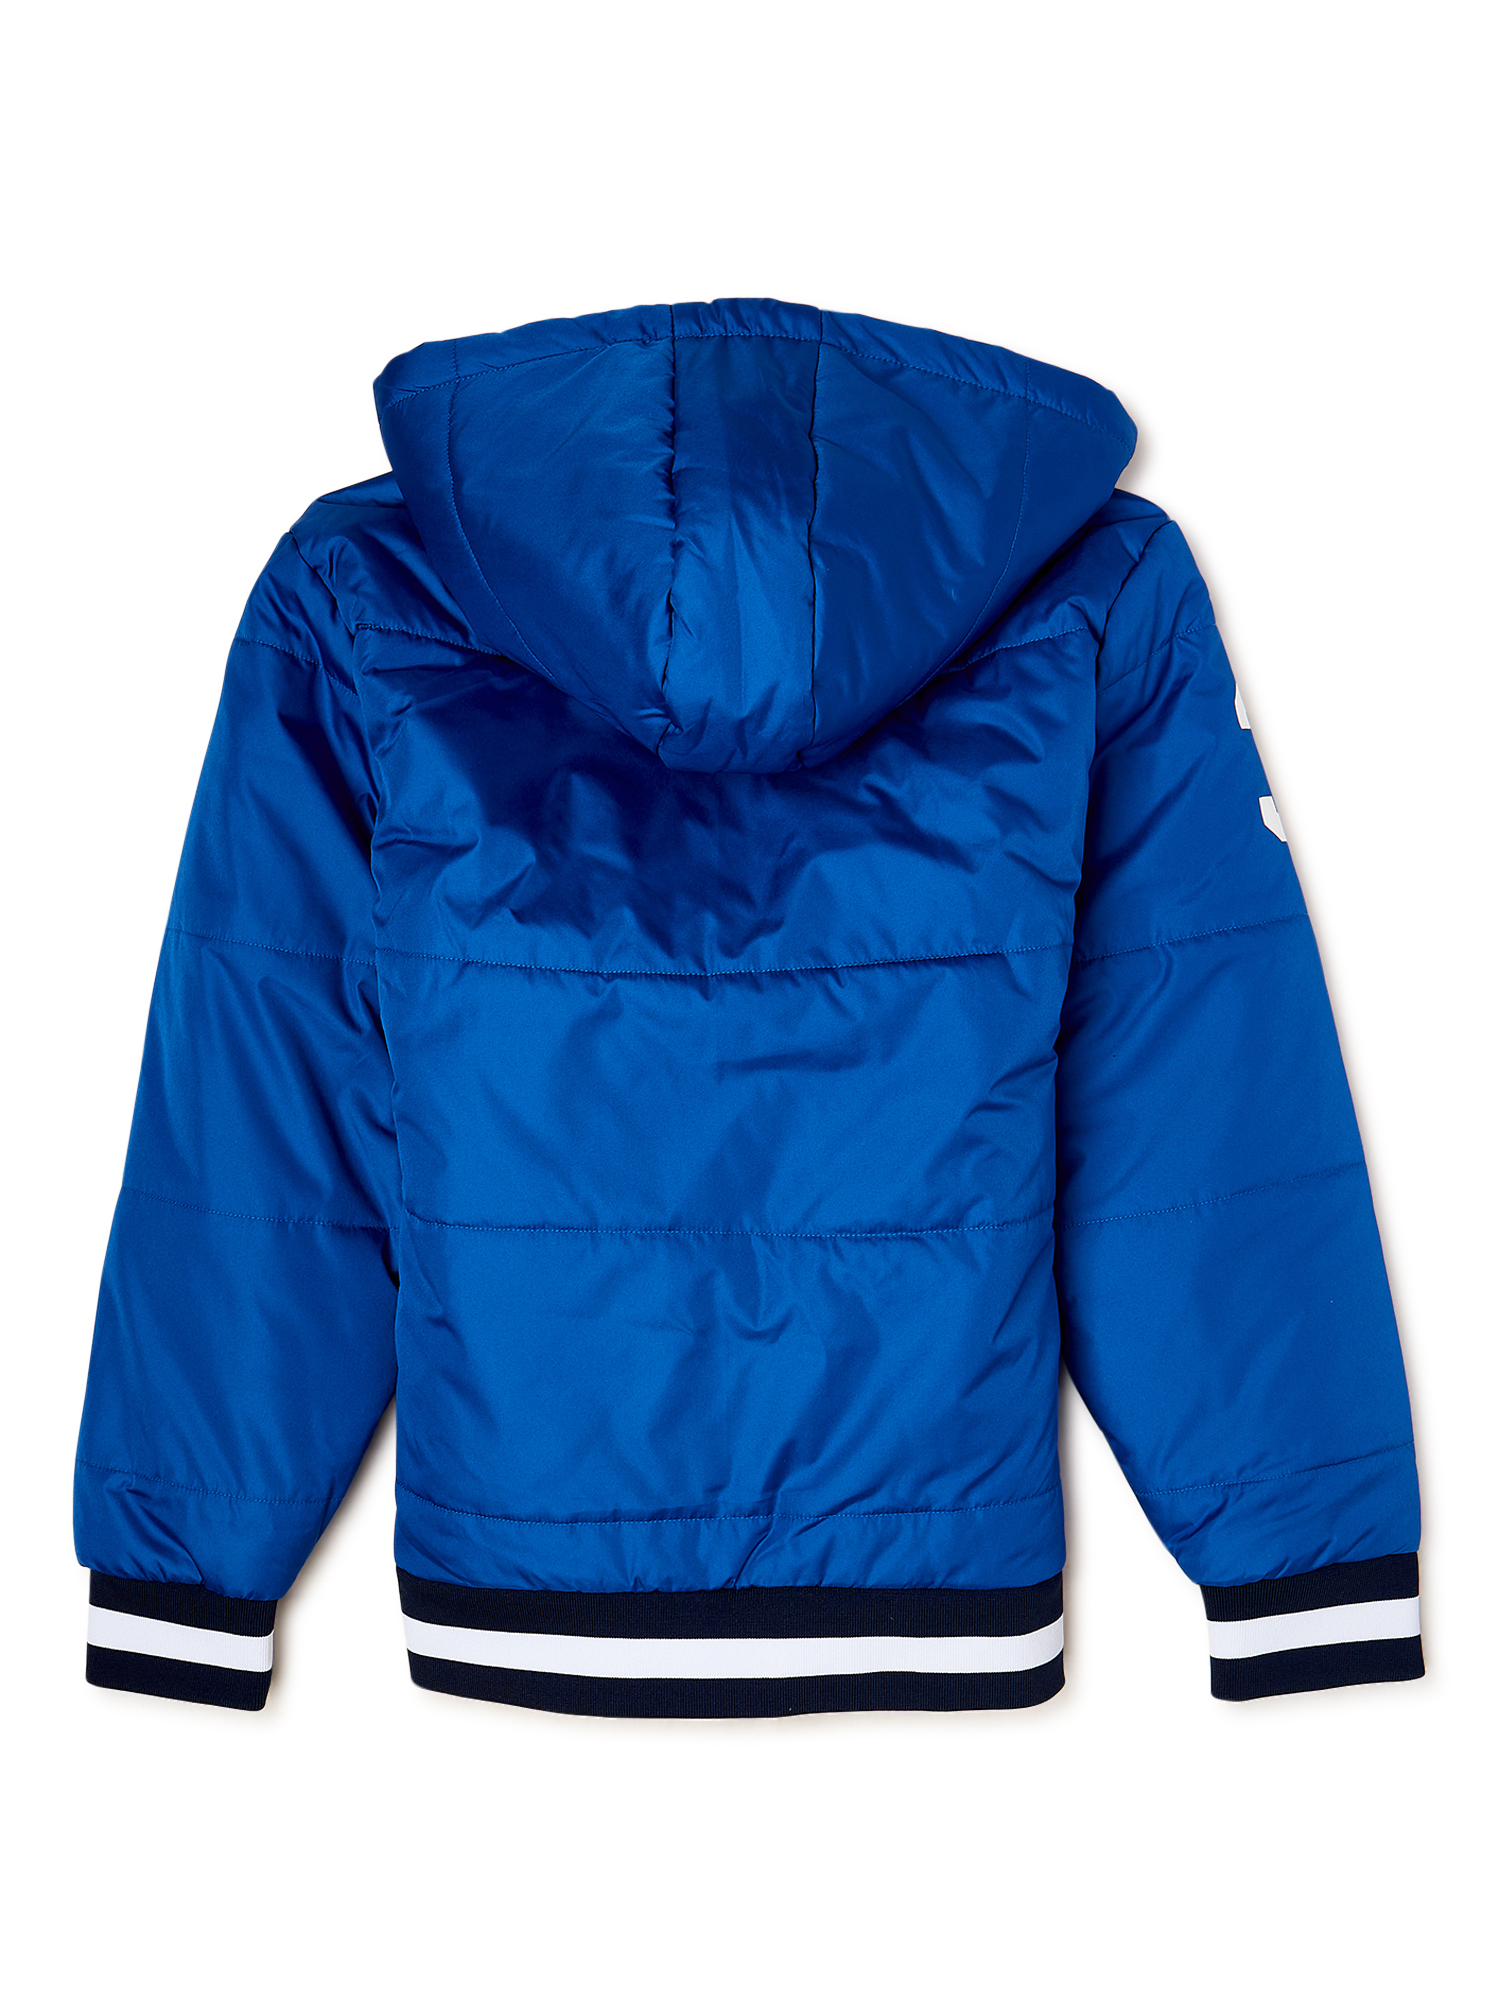 U.S. Polo Assn. Boys Varsity Puffer Jacket, Sizes 8-20 - image 3 of 4